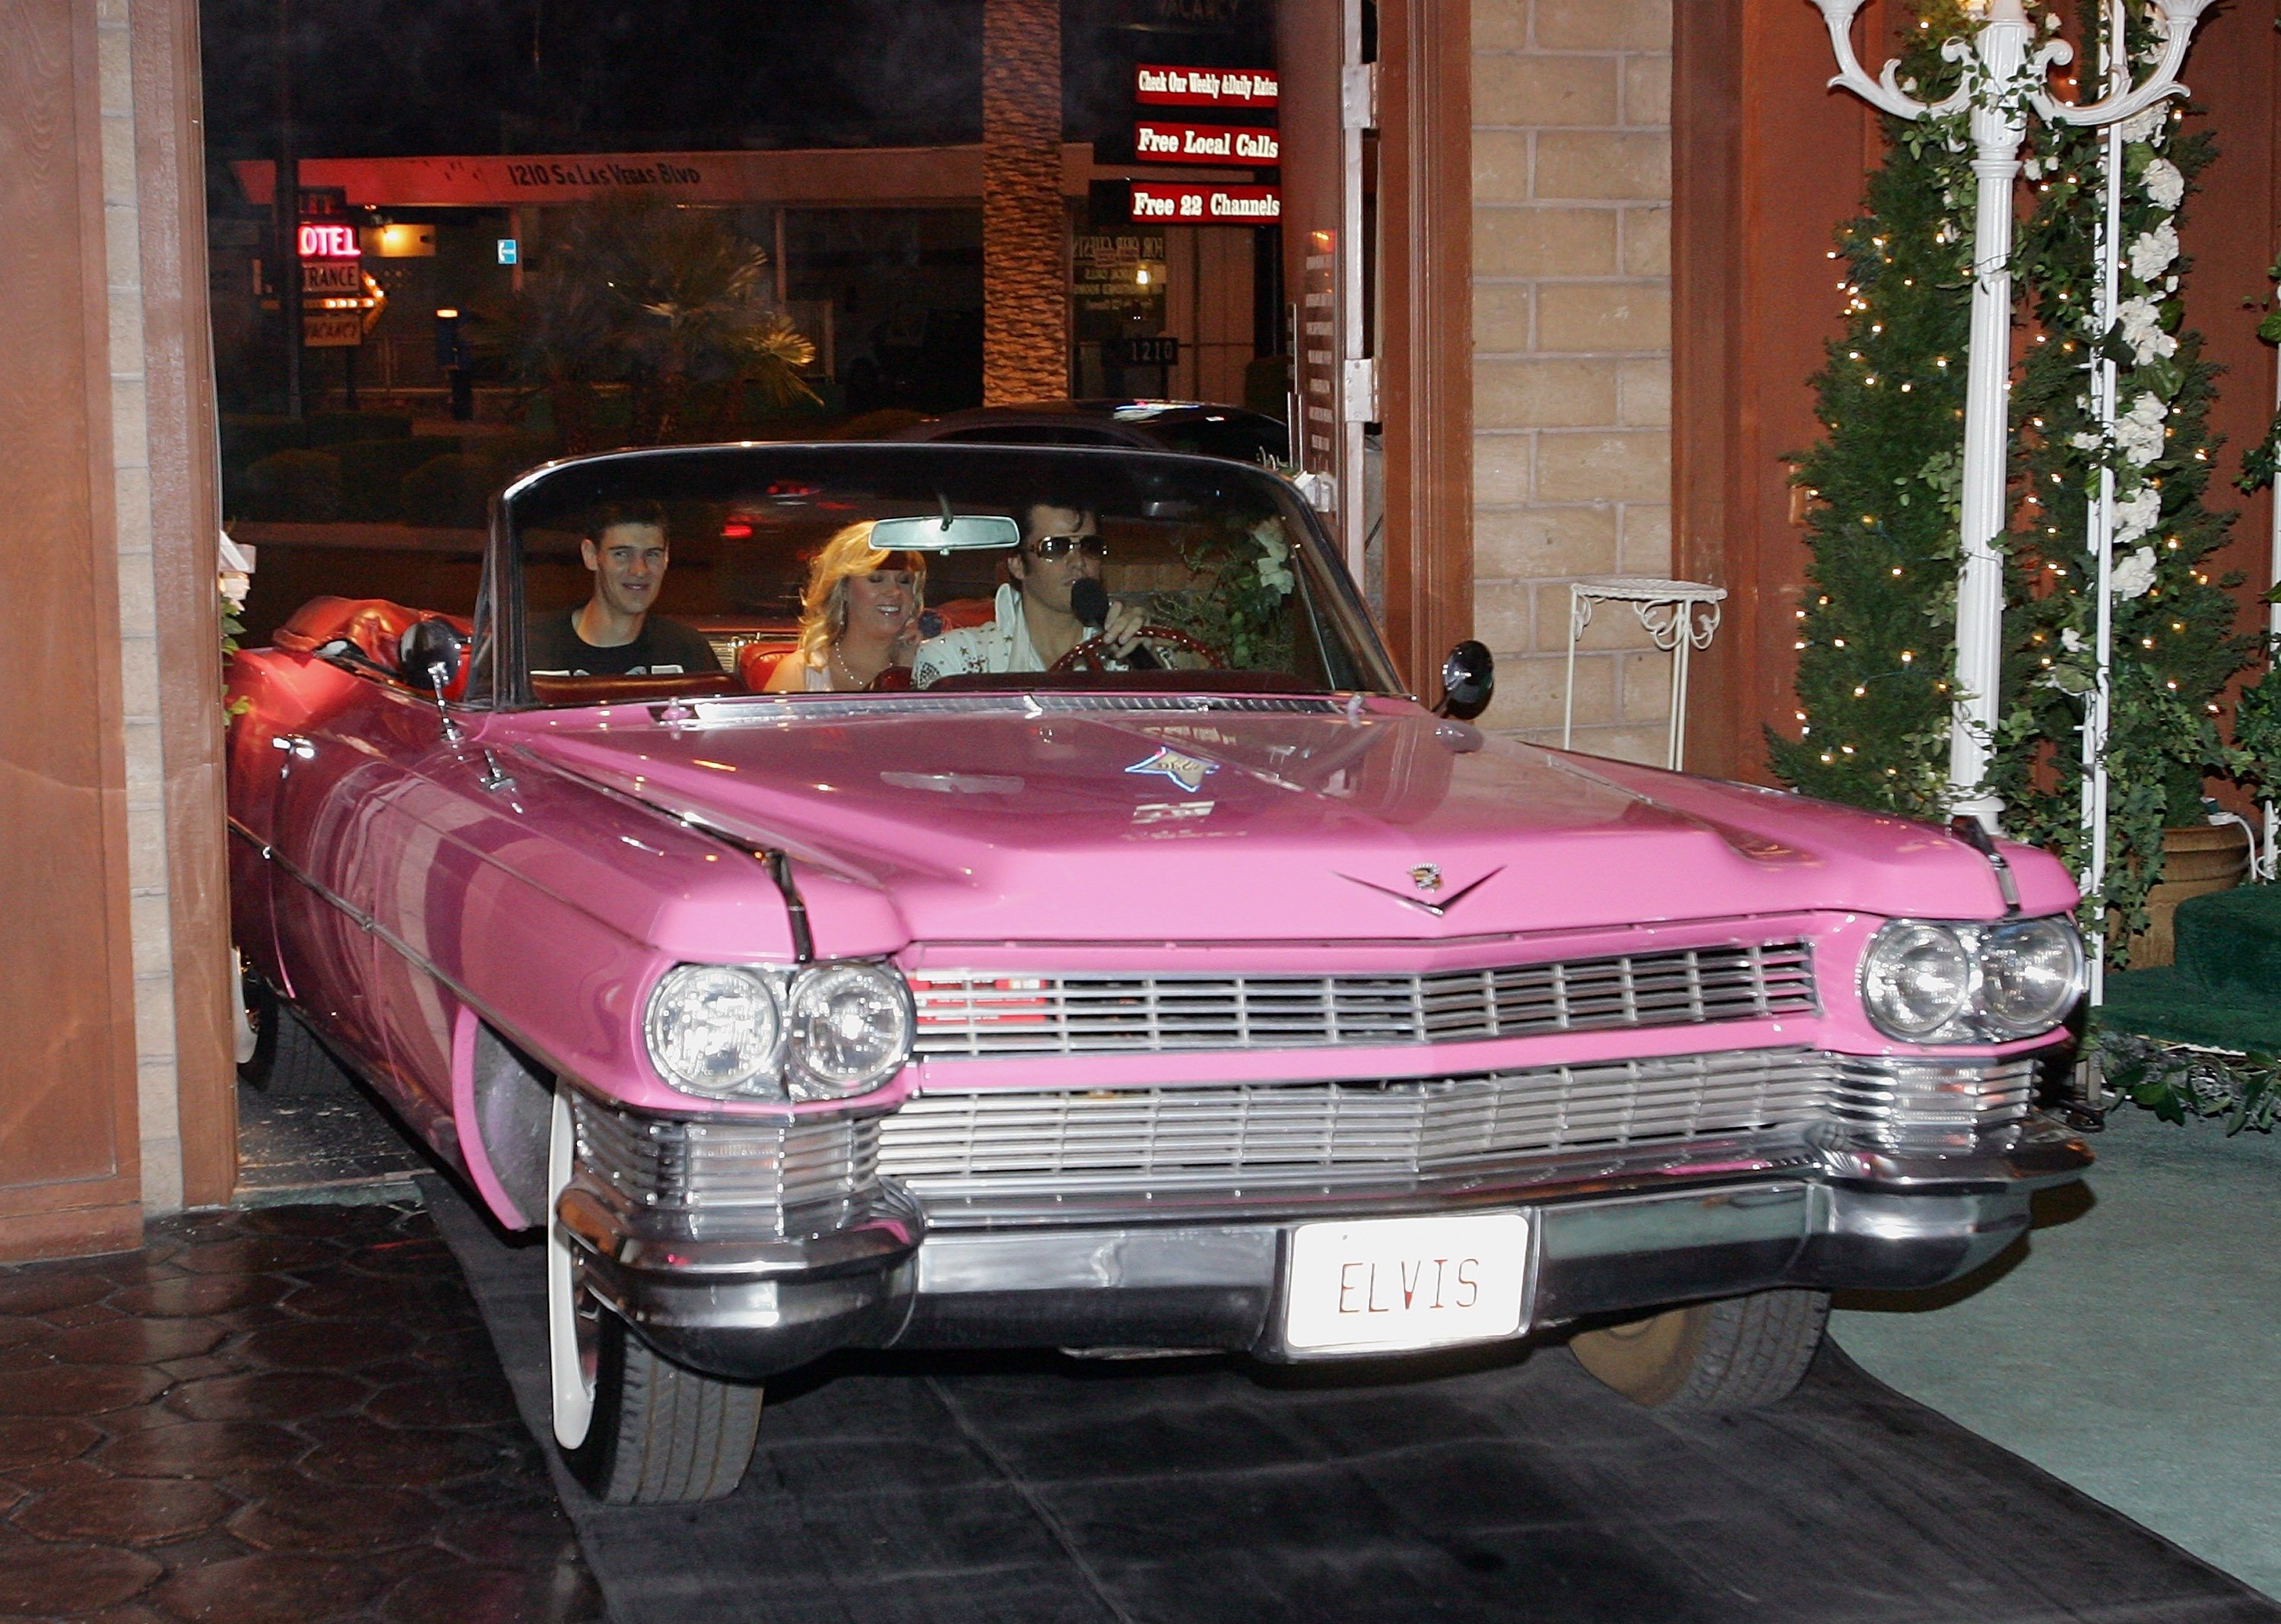 A replica of Elvis' pink Cadillac